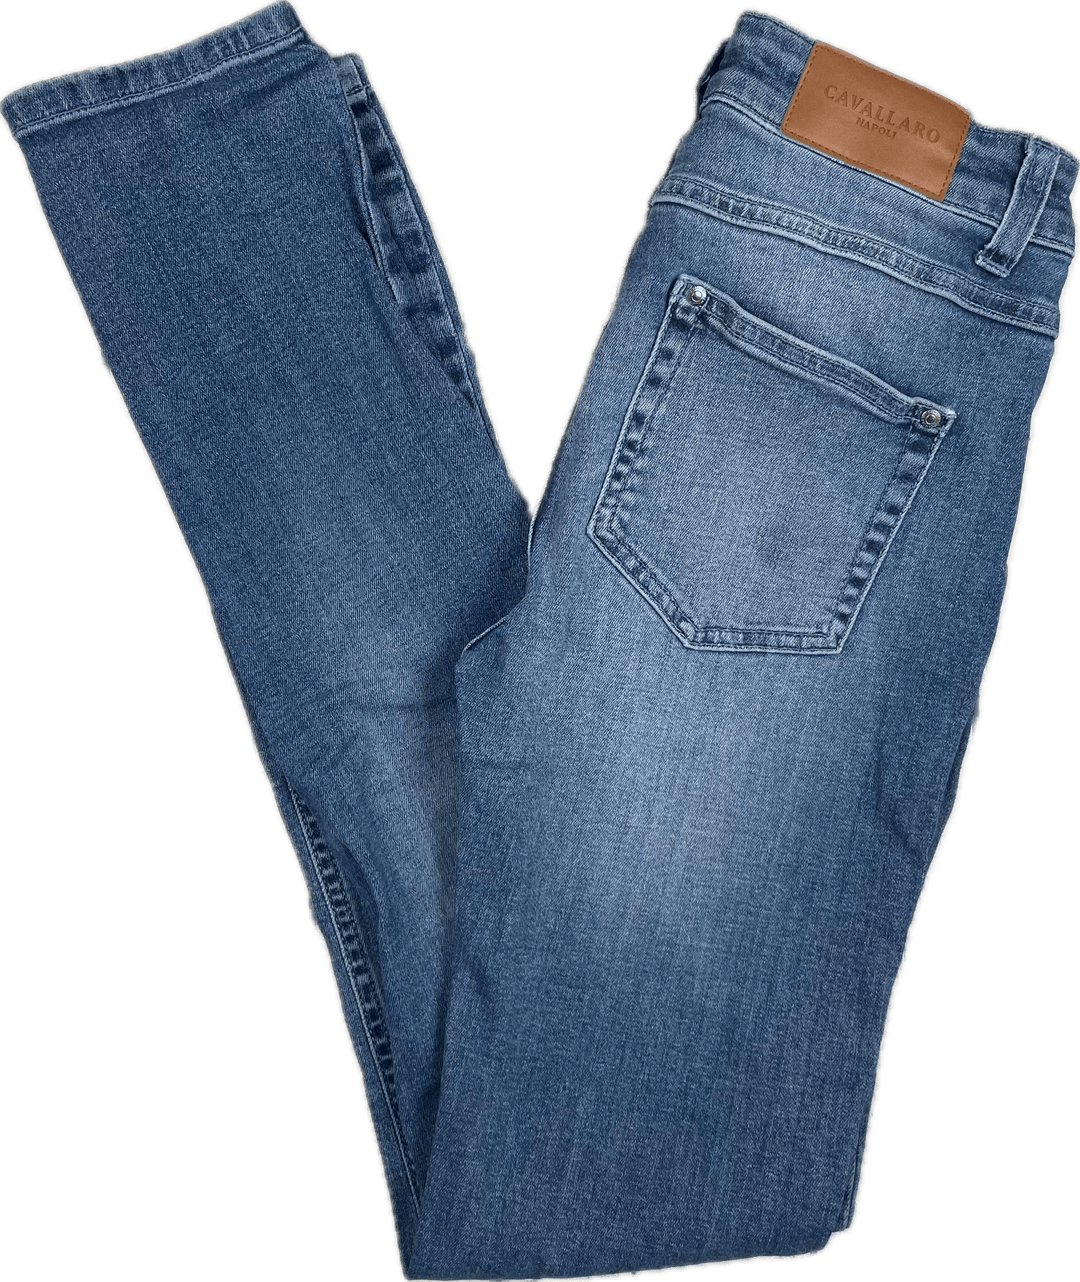 Italian Cavillaro Napoli Stretch Skinny Jeans -Size 26 - Jean Pool